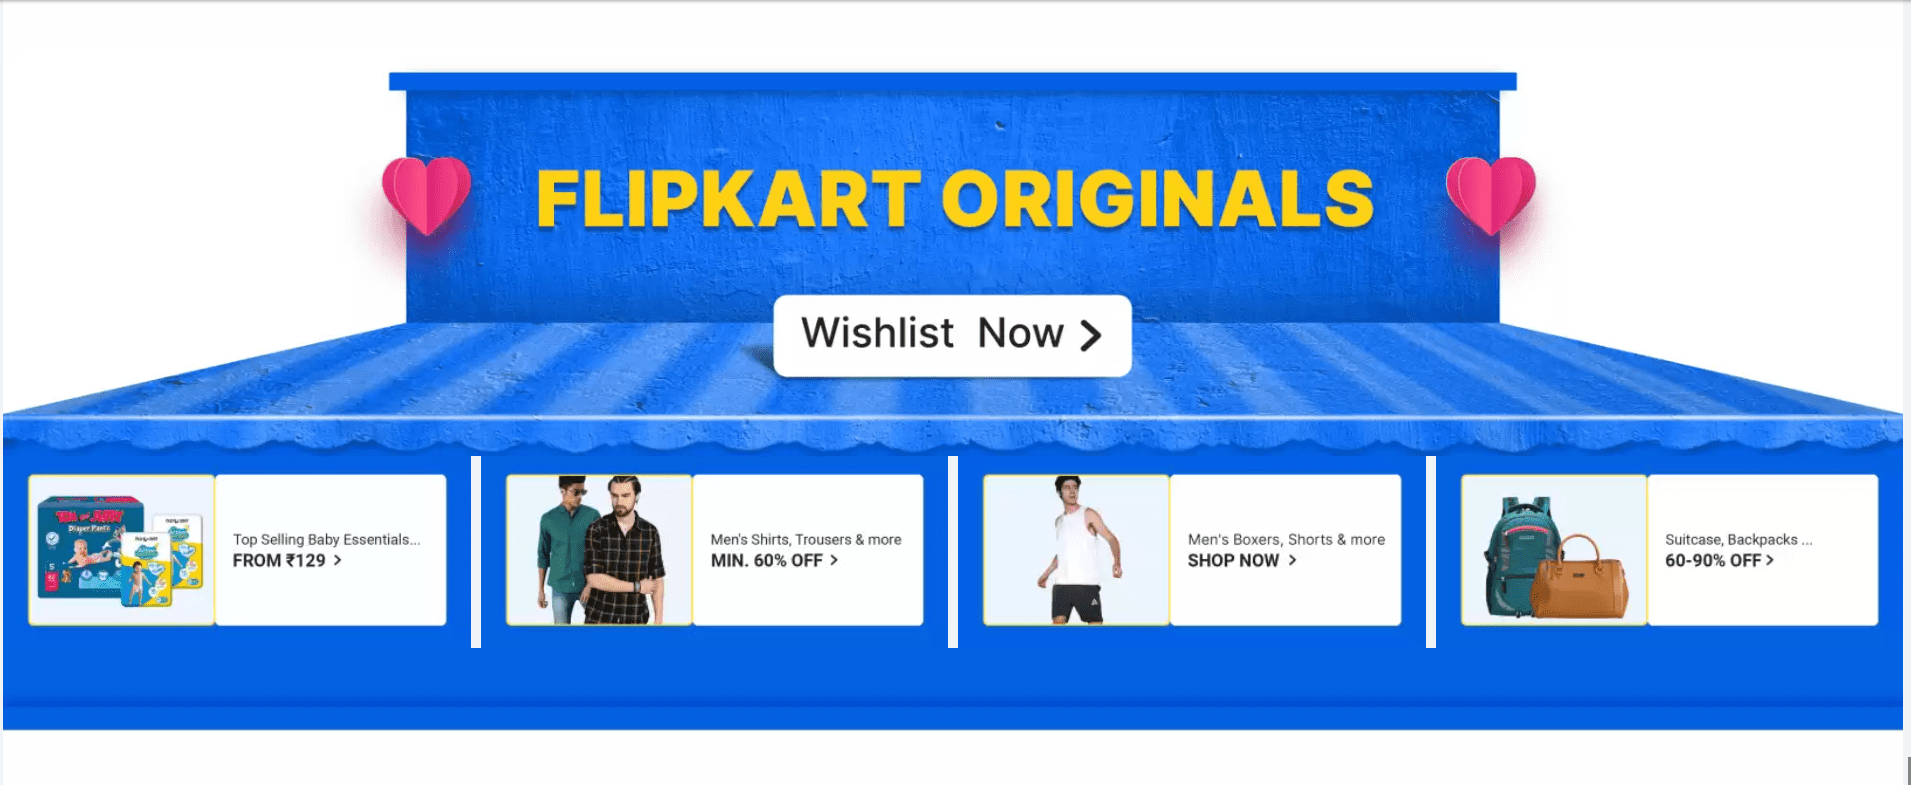 Offers on Flipkart Originals